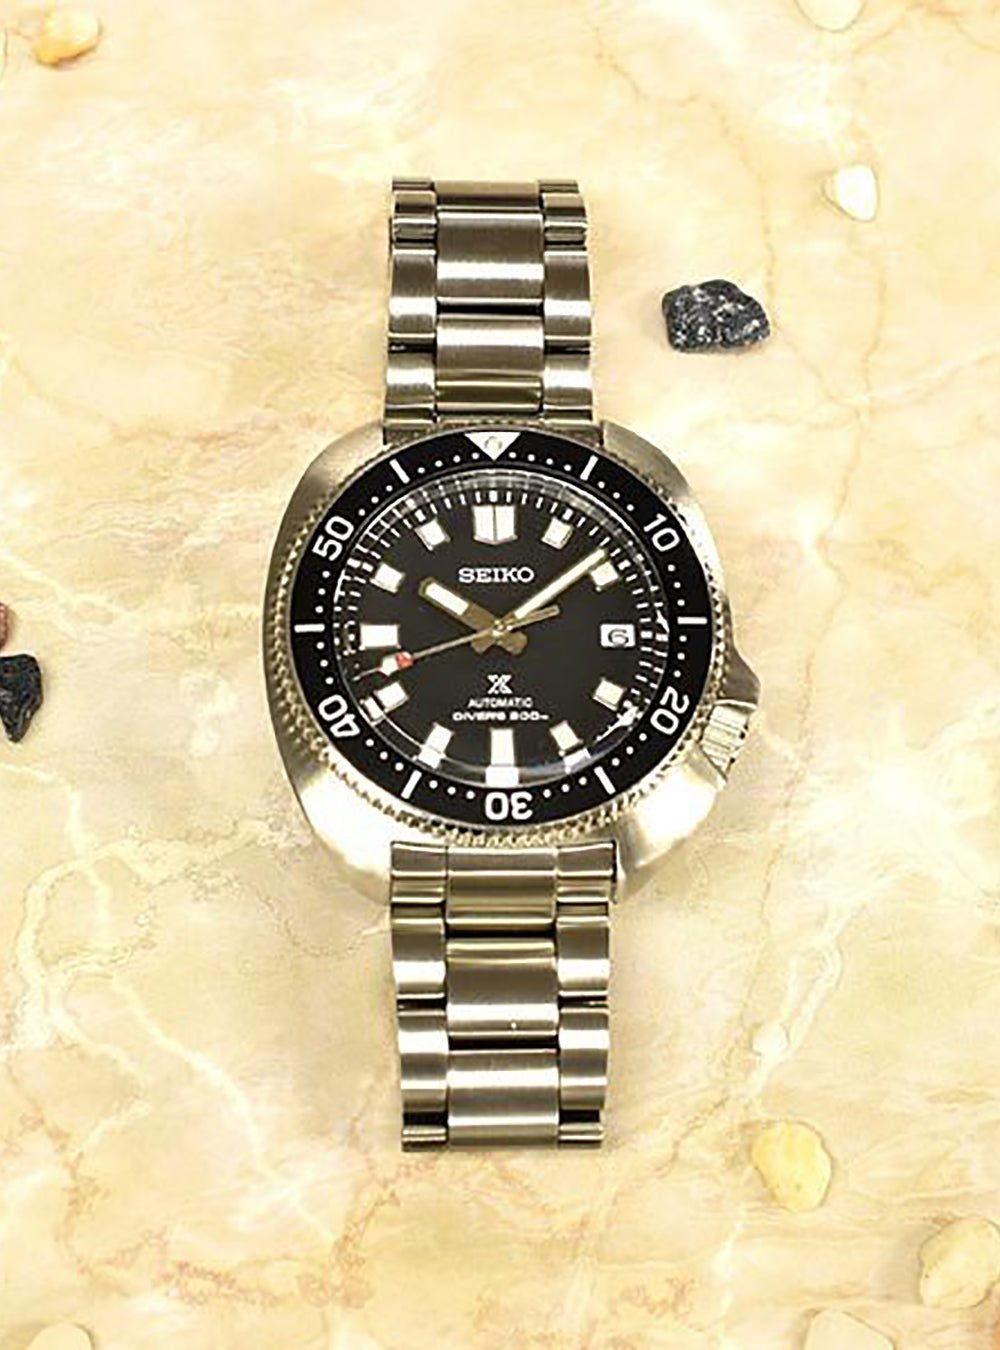 SEIKO PROSPEX セイコー プロスペックス DIVER'S 200m SBDC109 6R35-00T0 自動巻き ブラック ダイバー -  ブランド腕時計